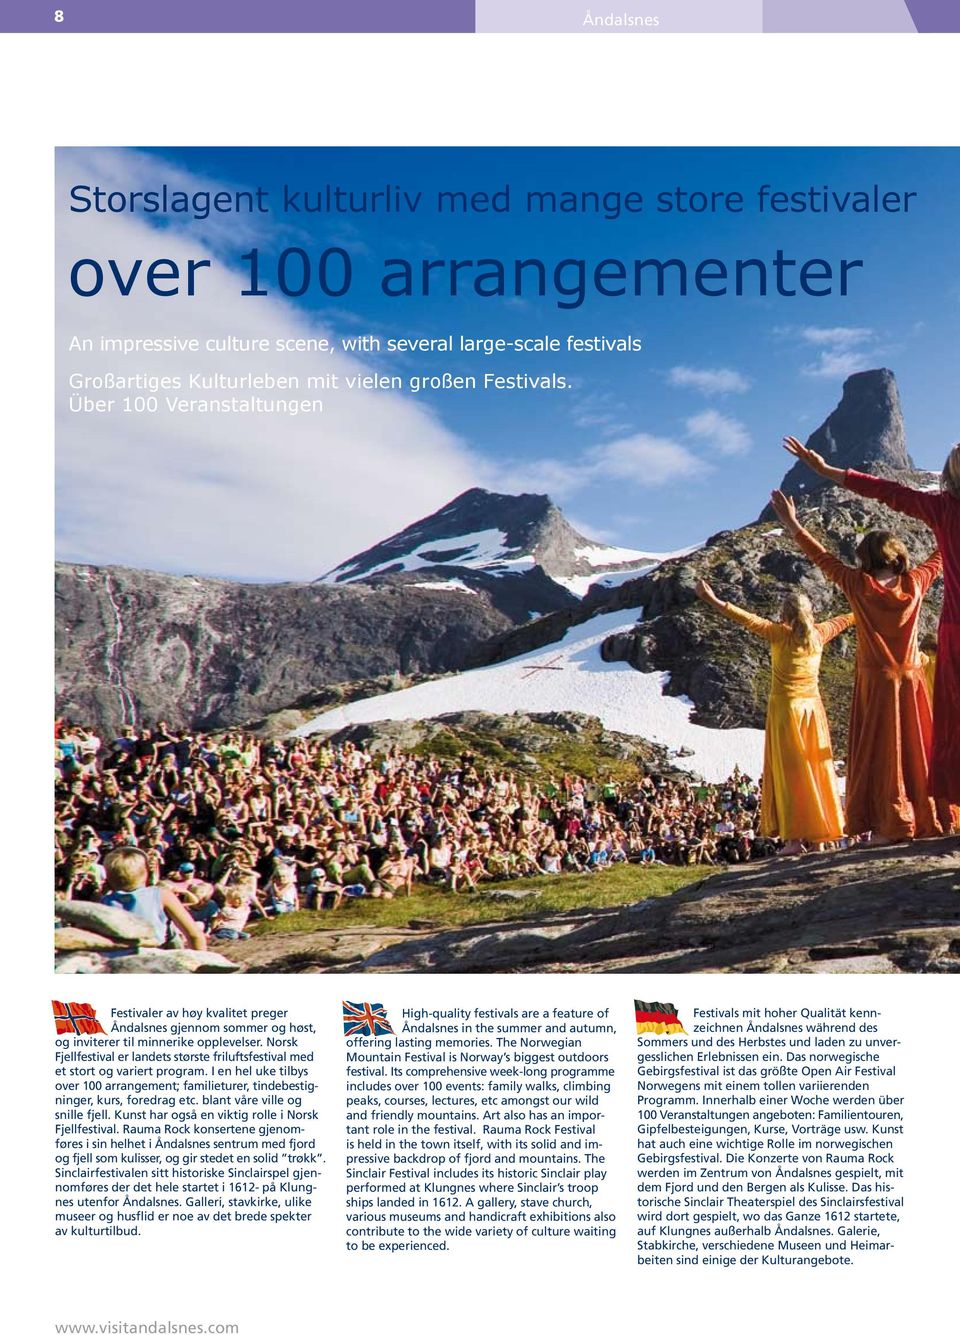 Norsk Fjellfestival er landets største friluftsfestival med et stort og variert program. I en hel uke tilbys over 100 arrangement; familieturer, tindebestigninger, kurs, foredrag etc.